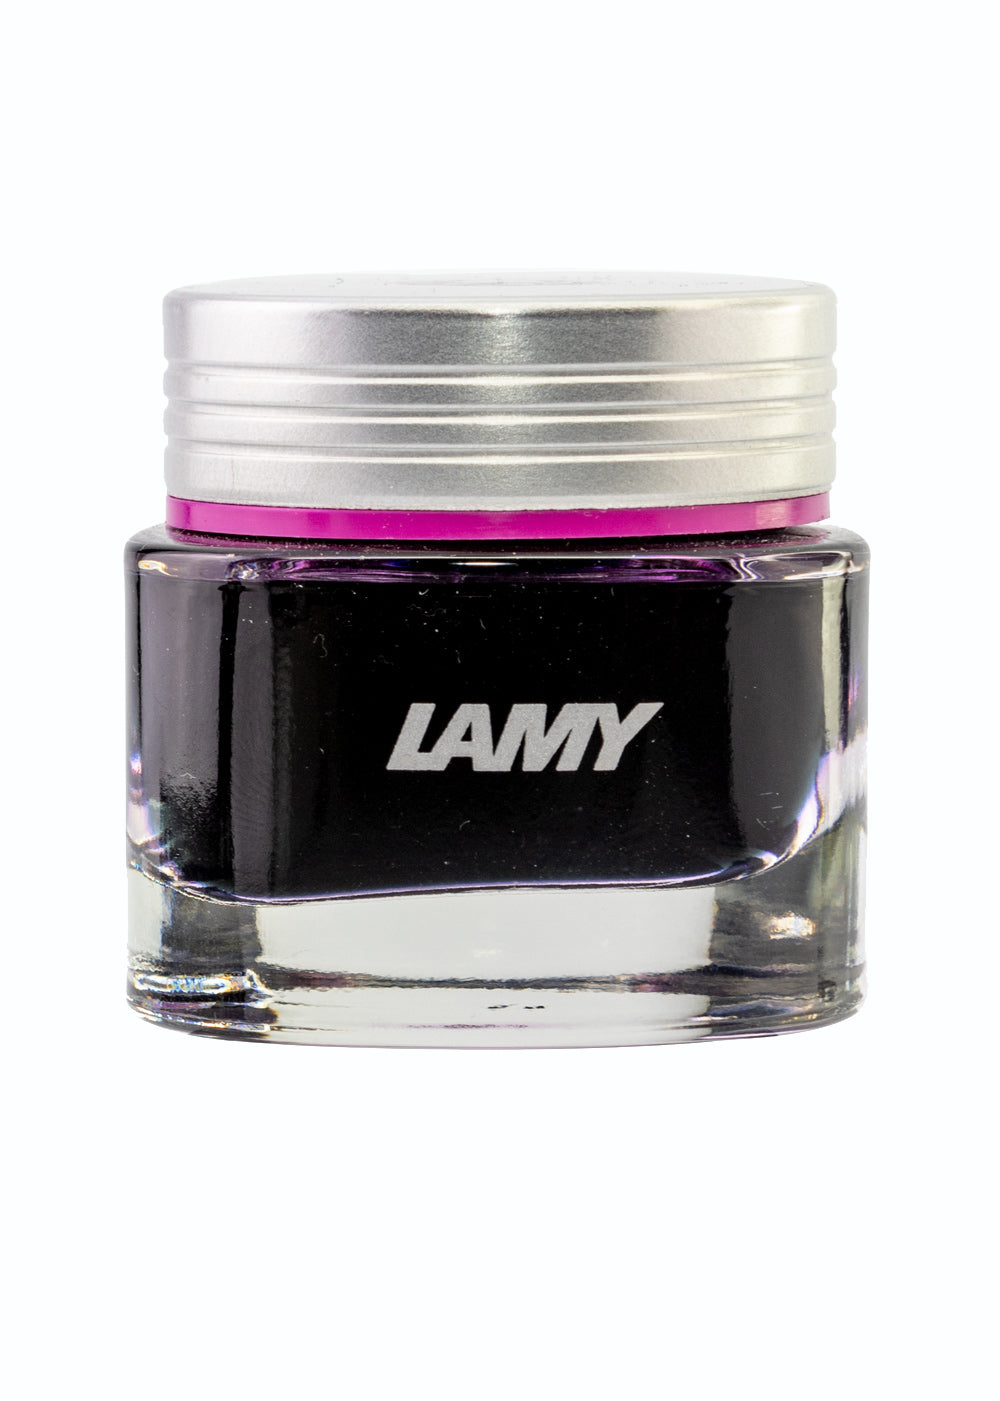 Lamy Crystal Beryl ink